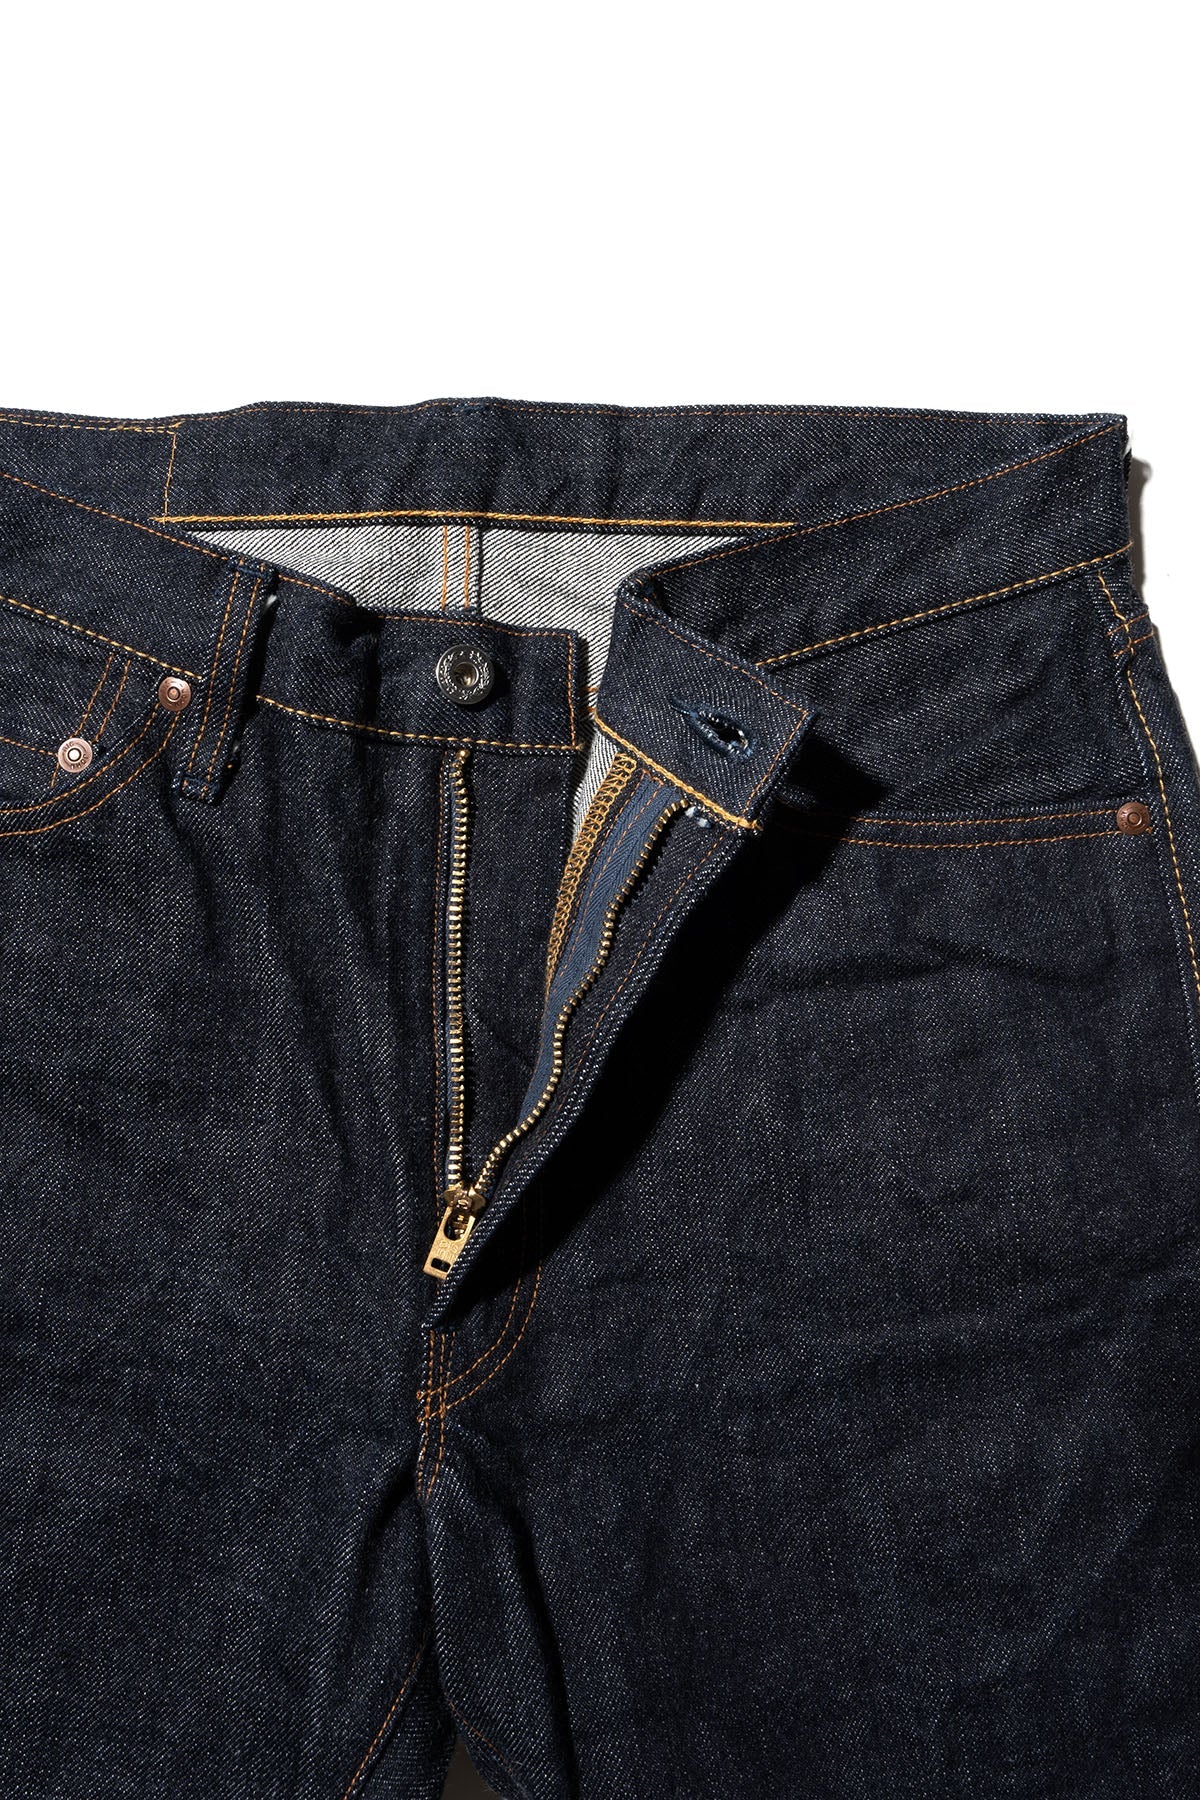 Billie Jeans - High Waisted Cotton Distressed Mom Denim Jeans in Black Wash  | Showpo USA